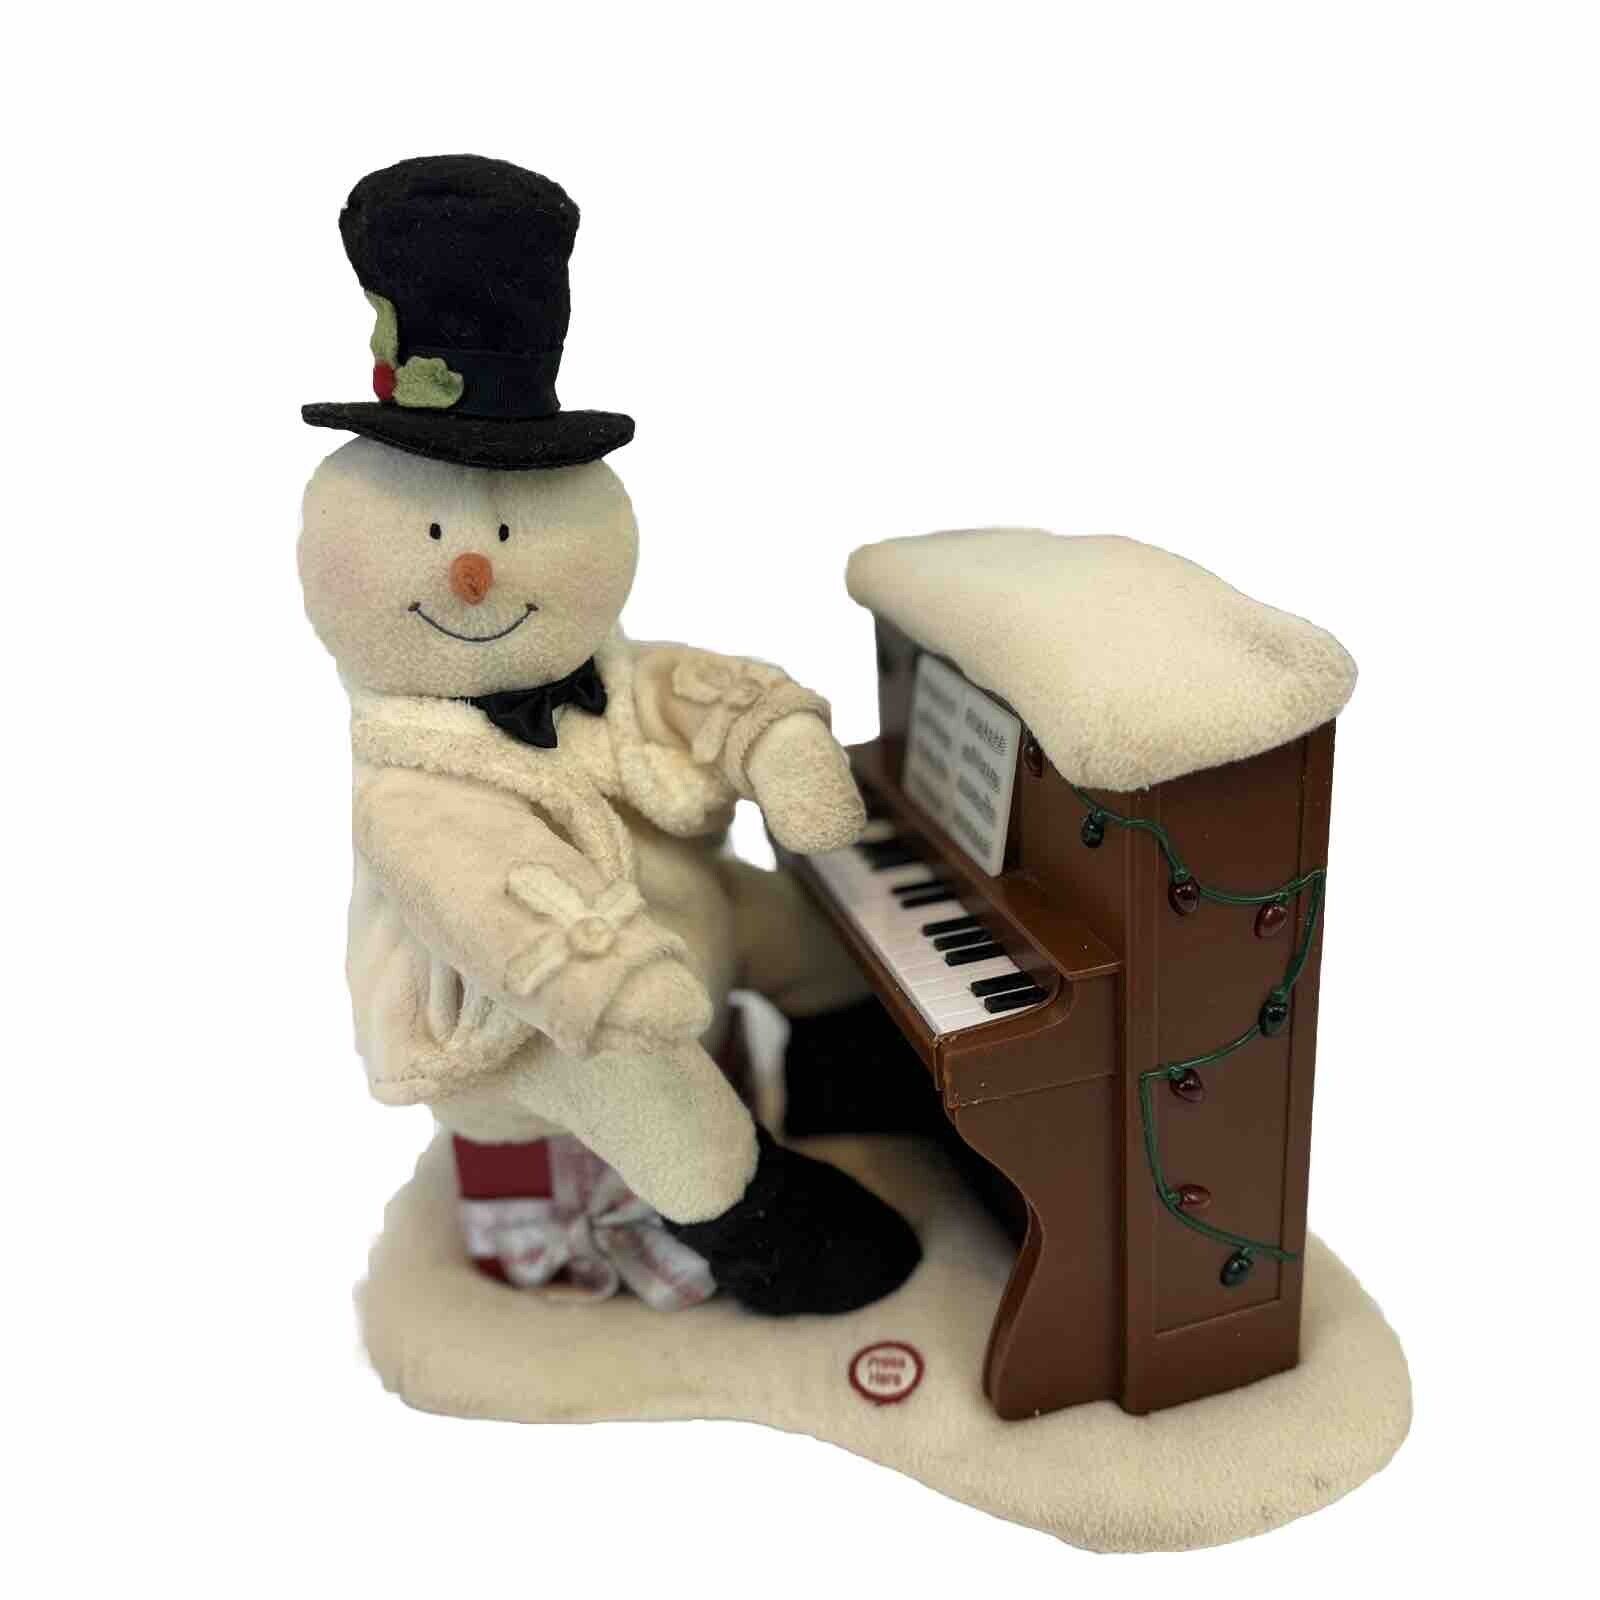 2005 Hallmark Jingle Pals Plush Piano Playing Singing Snowman Works Lights Moves